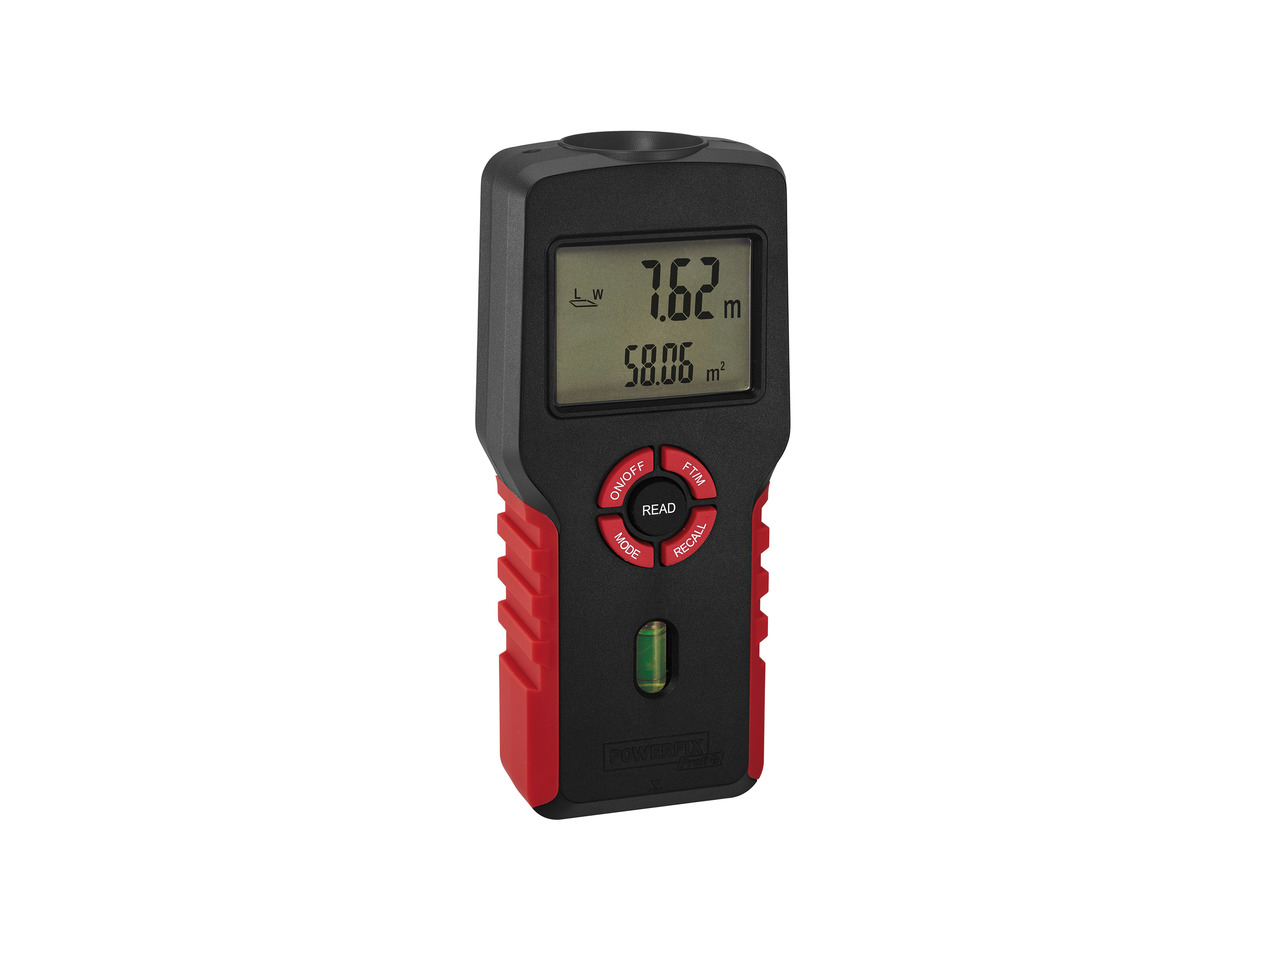 Powerfix Profi Ultrasonic Distance Meter, Multi-Purpose Detector or Moisture Meter1